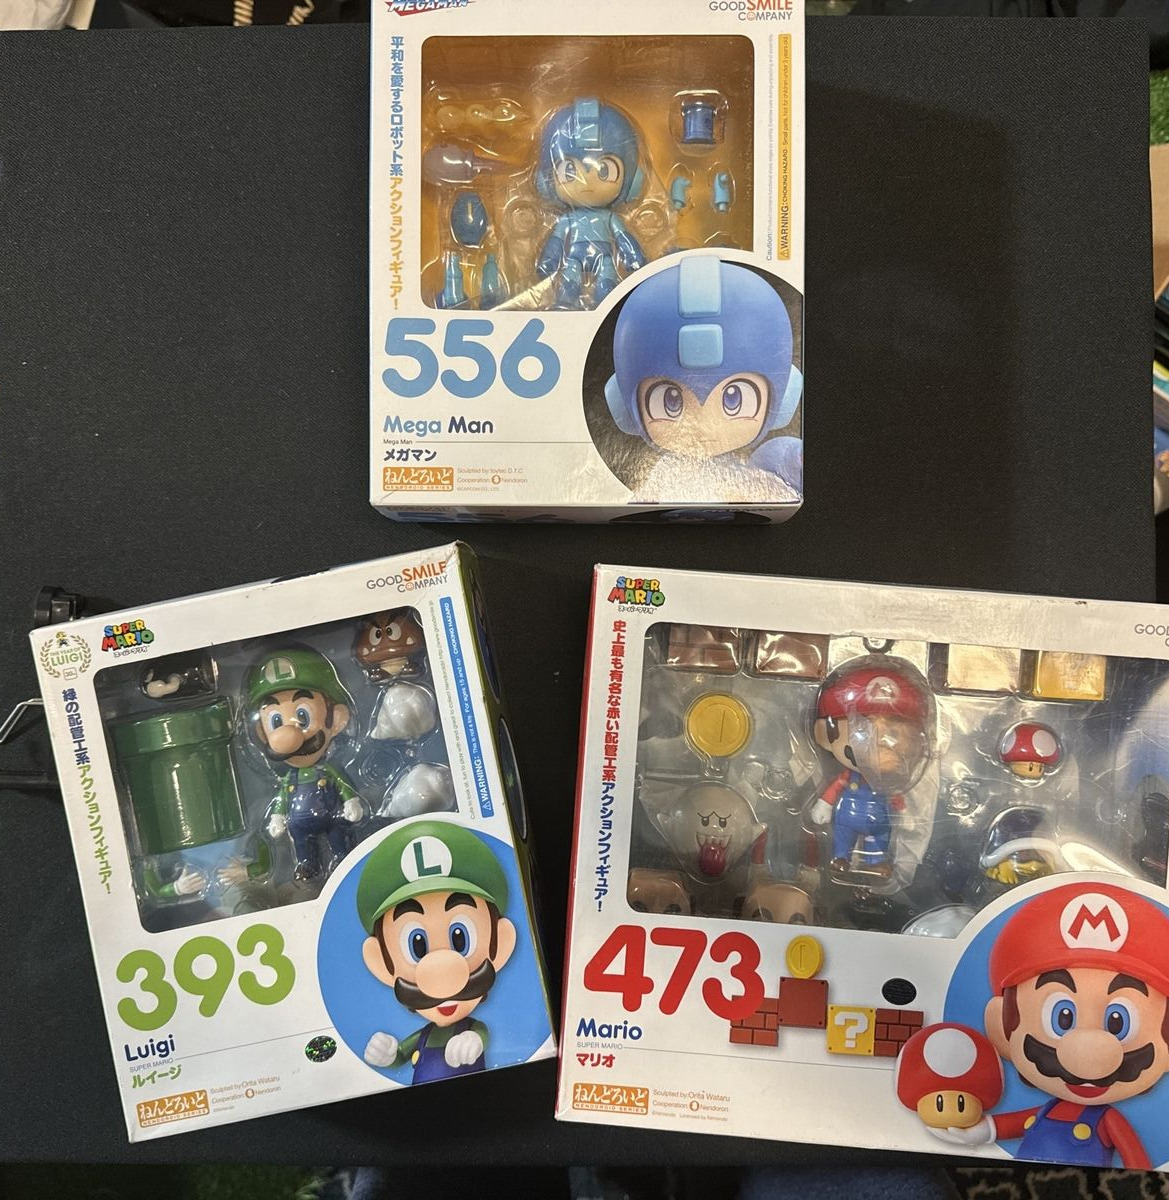 Nendoroid Mario 473, Luigi 393, Megamn 556 COMPLETE  Lot